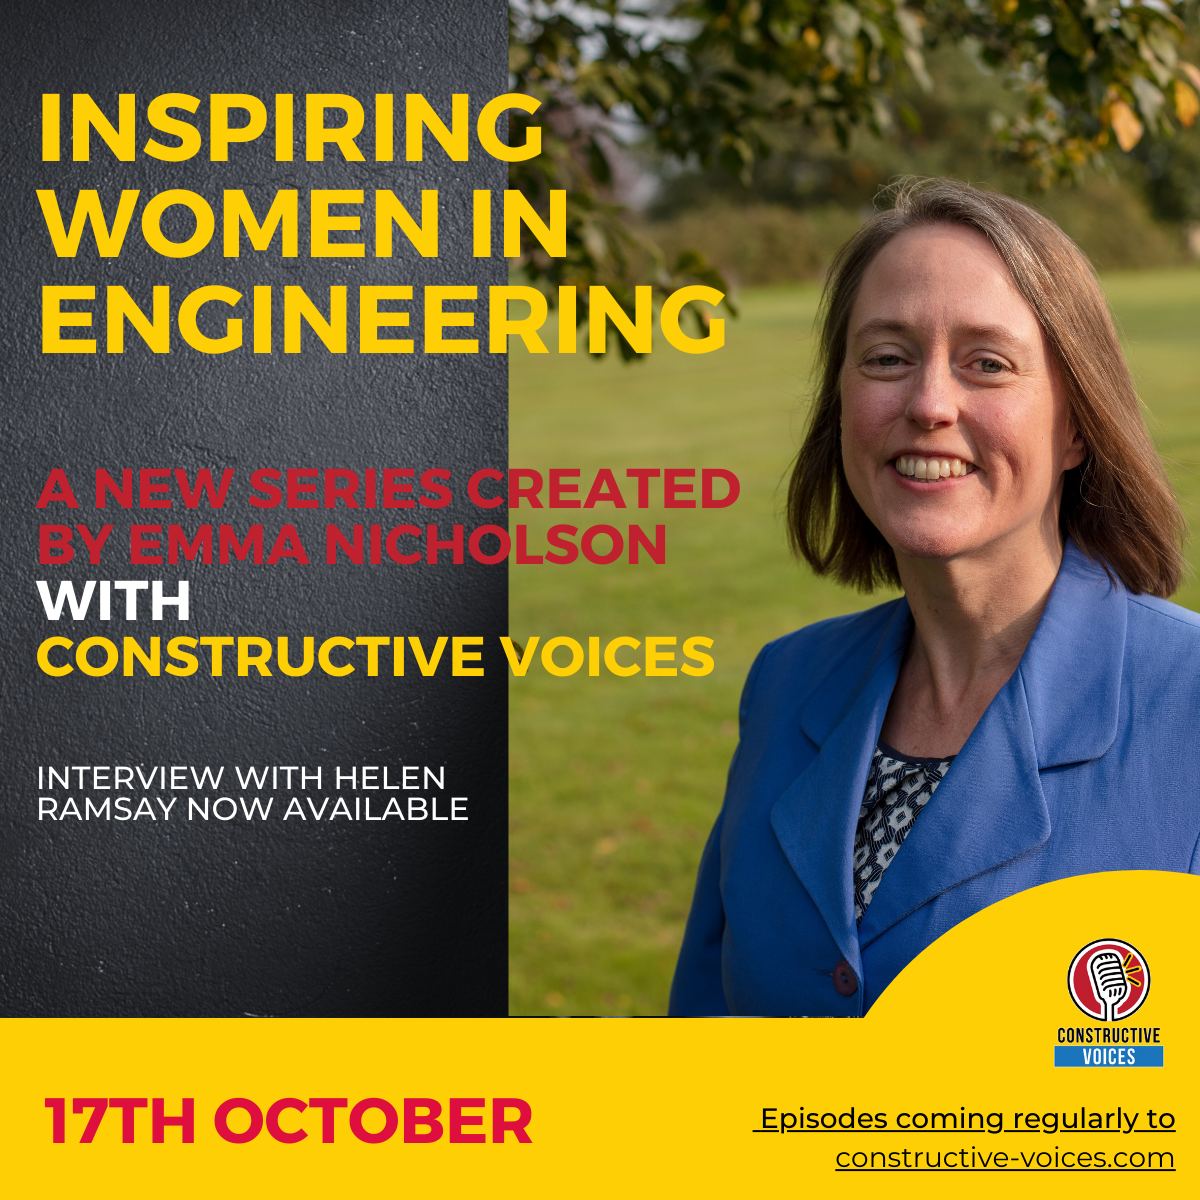 Focus on Female Engineers with Helen Ramsay